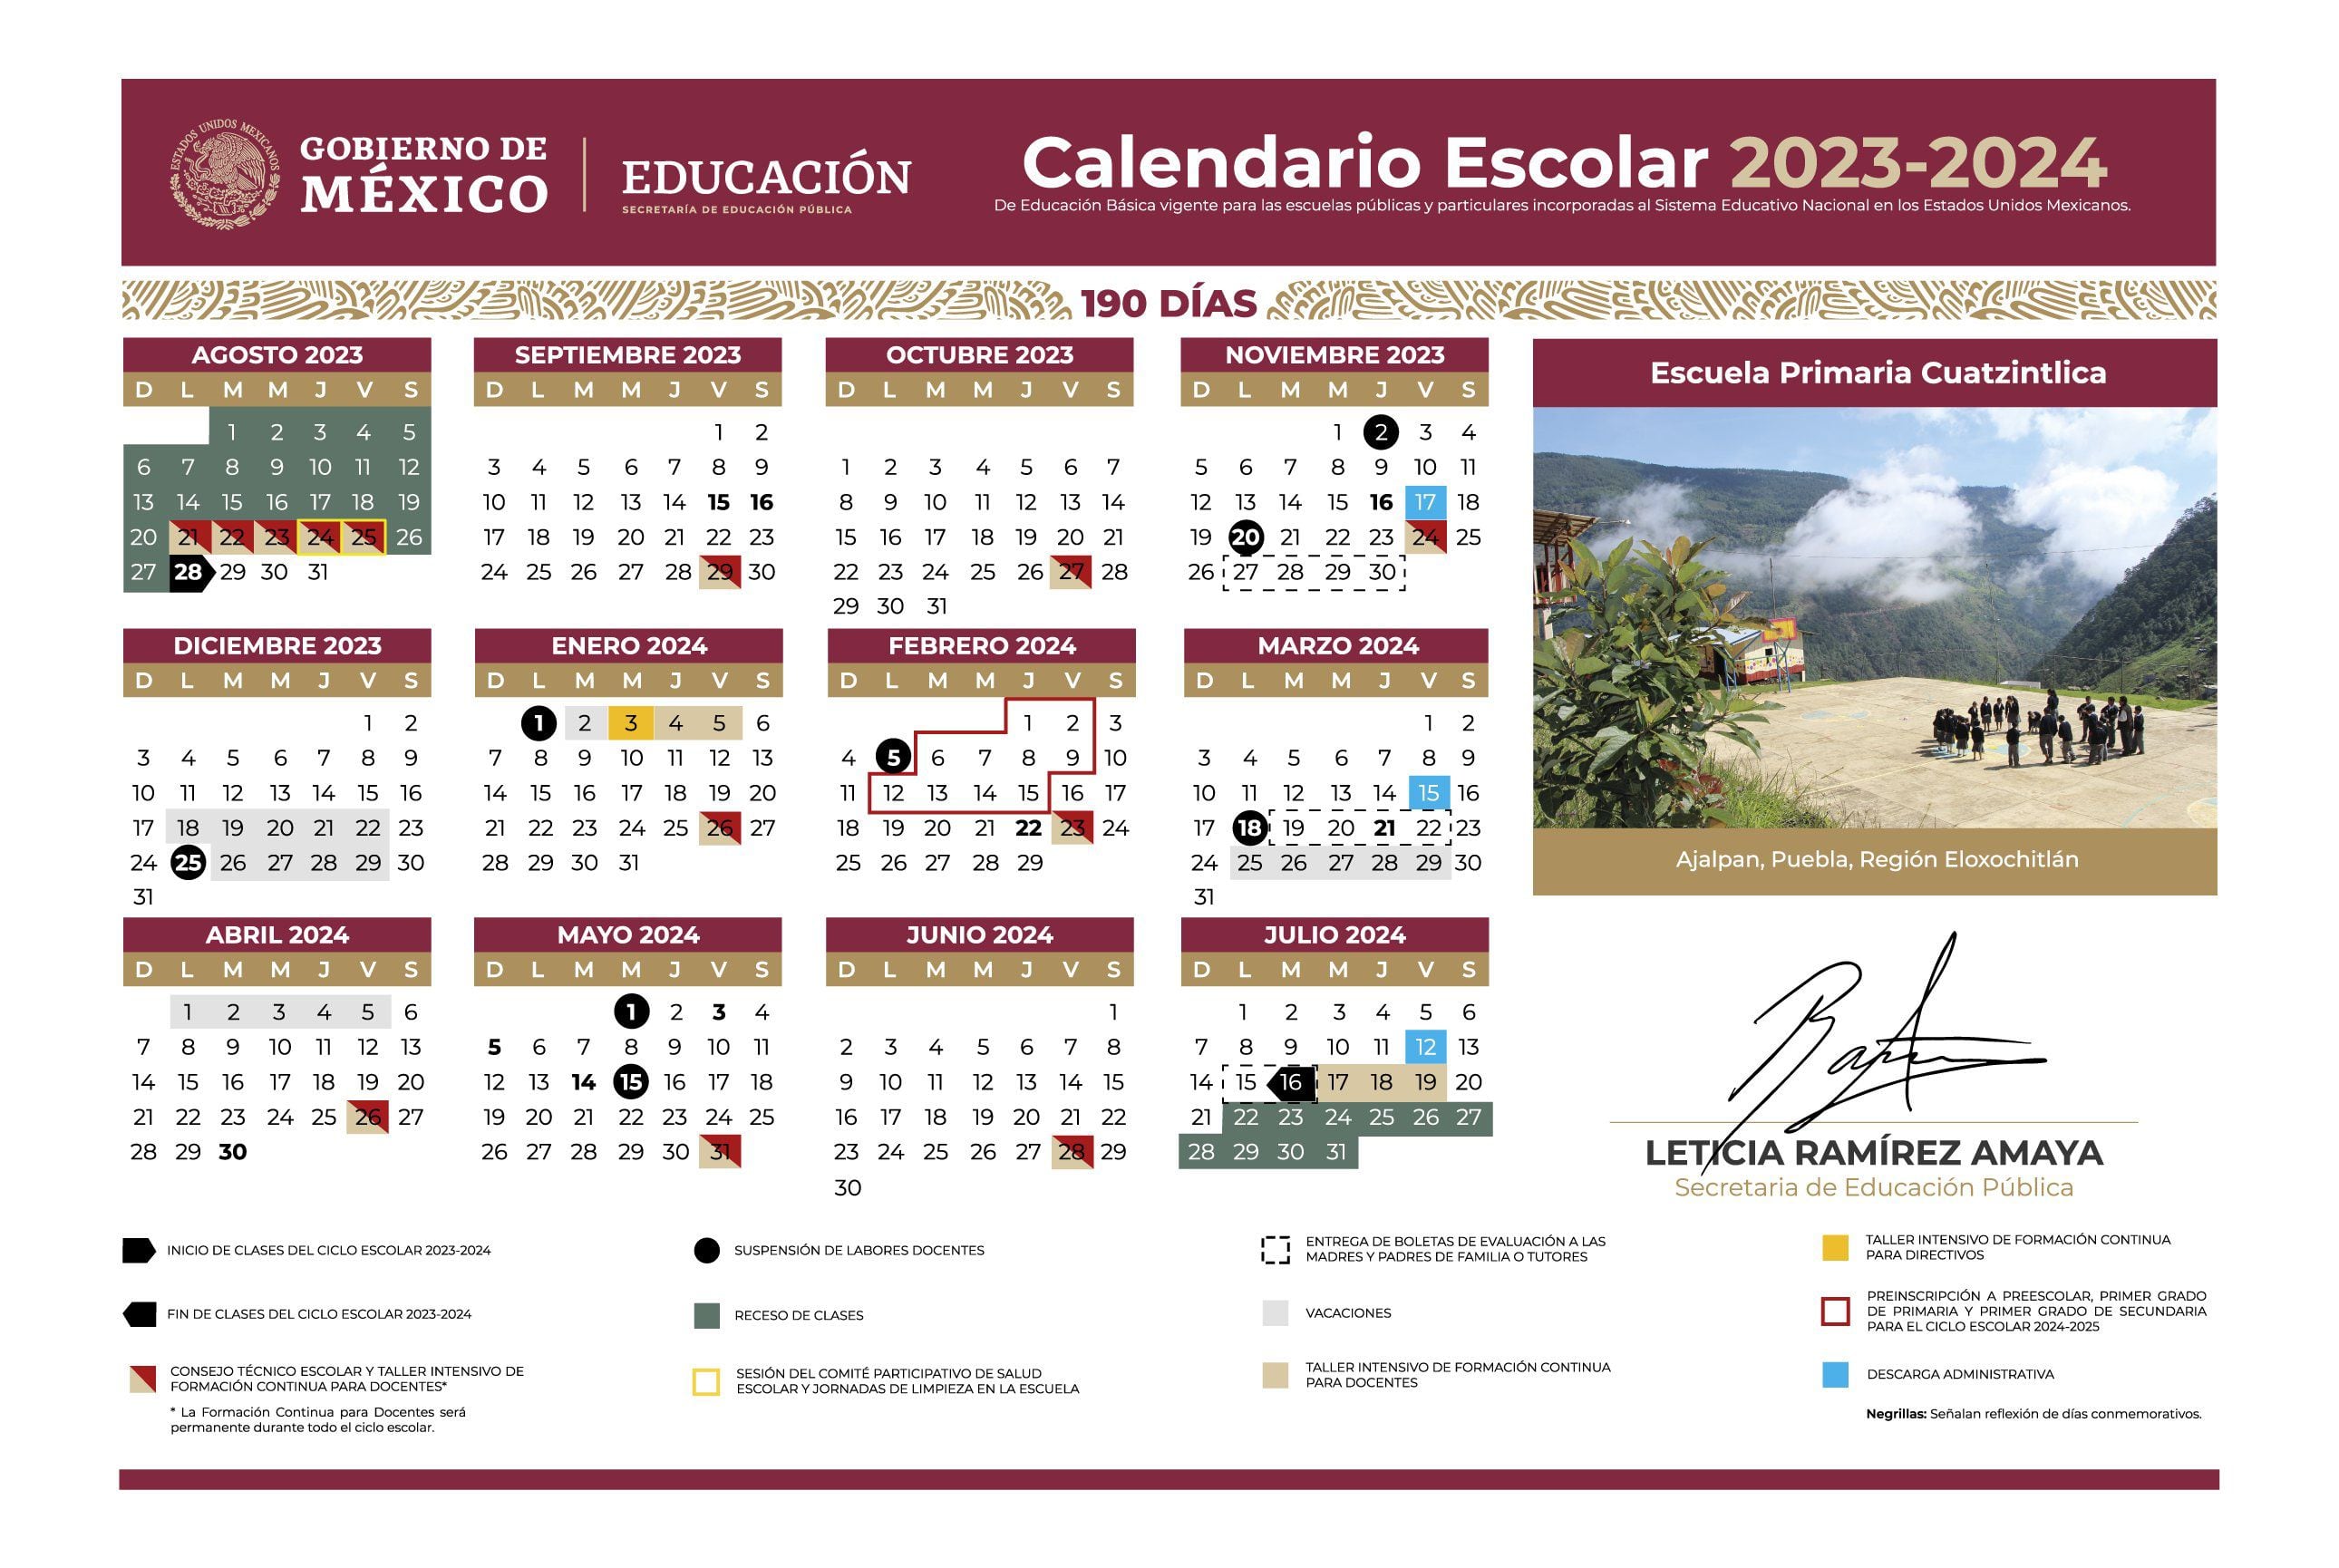 Calendario escolar 2023-2024 de la SEP